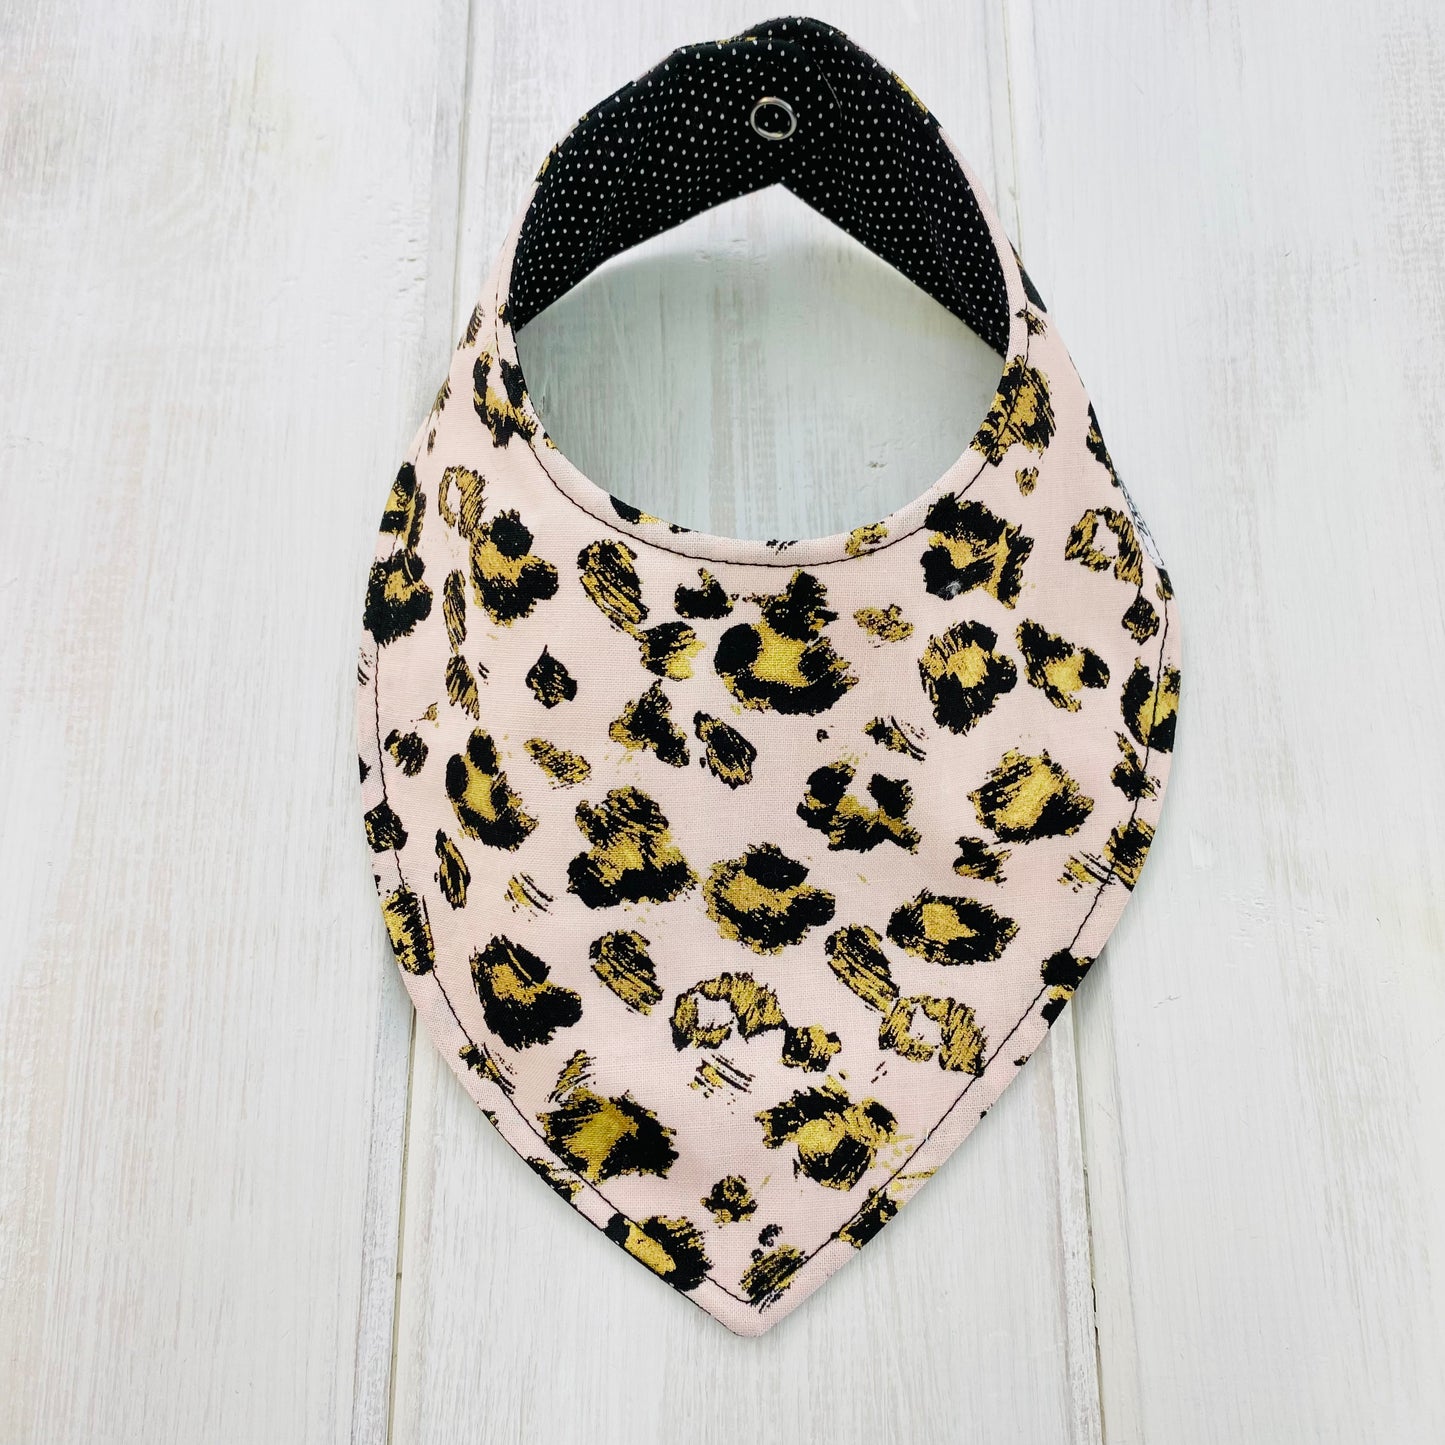 Blush cheetah print bandana bib with gold accents, animal print, reversible and waterproof bib